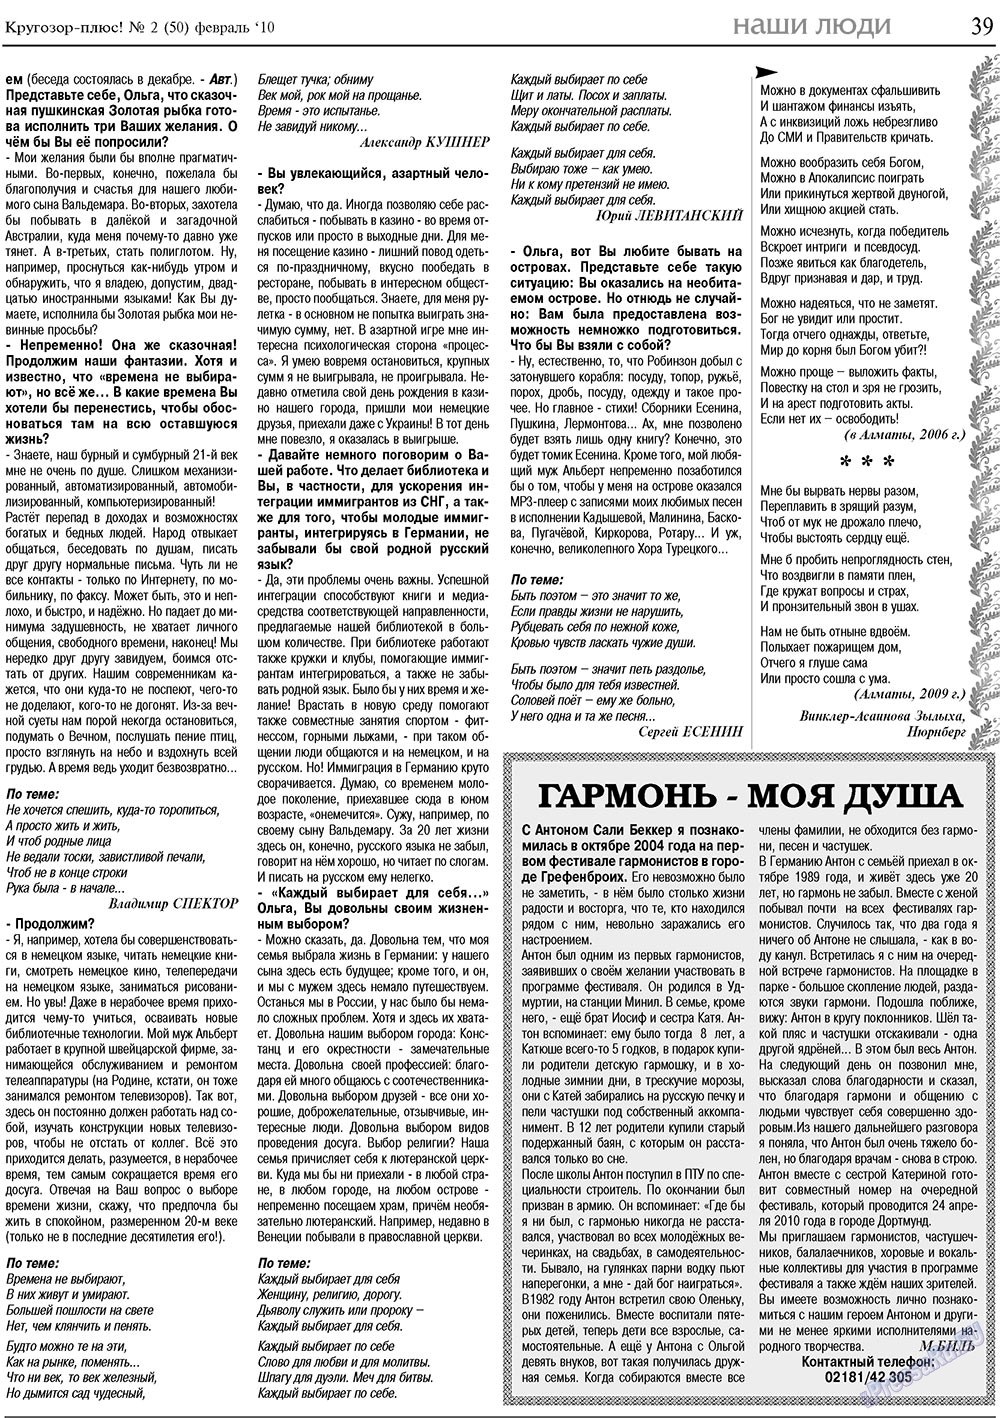 Кругозор плюс! (газета). 2010 год, номер 2, стр. 39